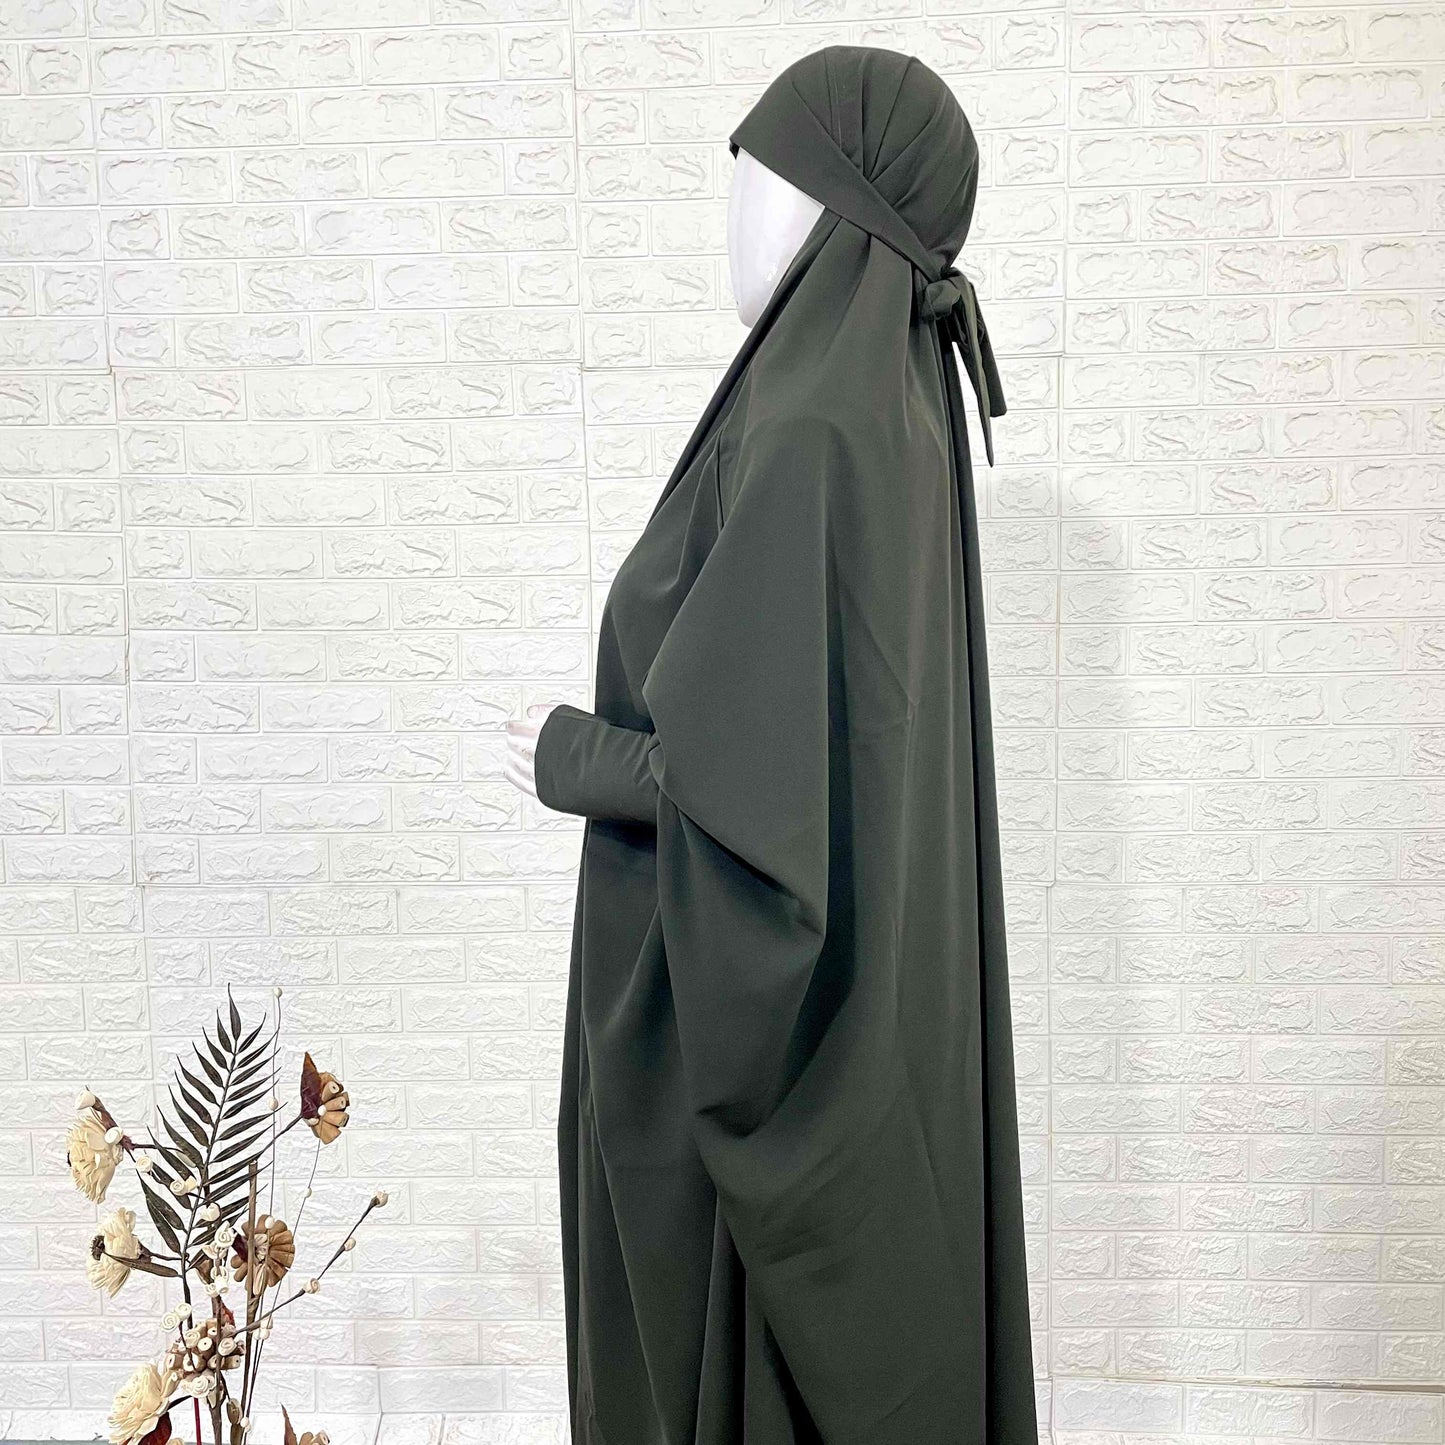 Olive Jilbab With Plain Sleeves